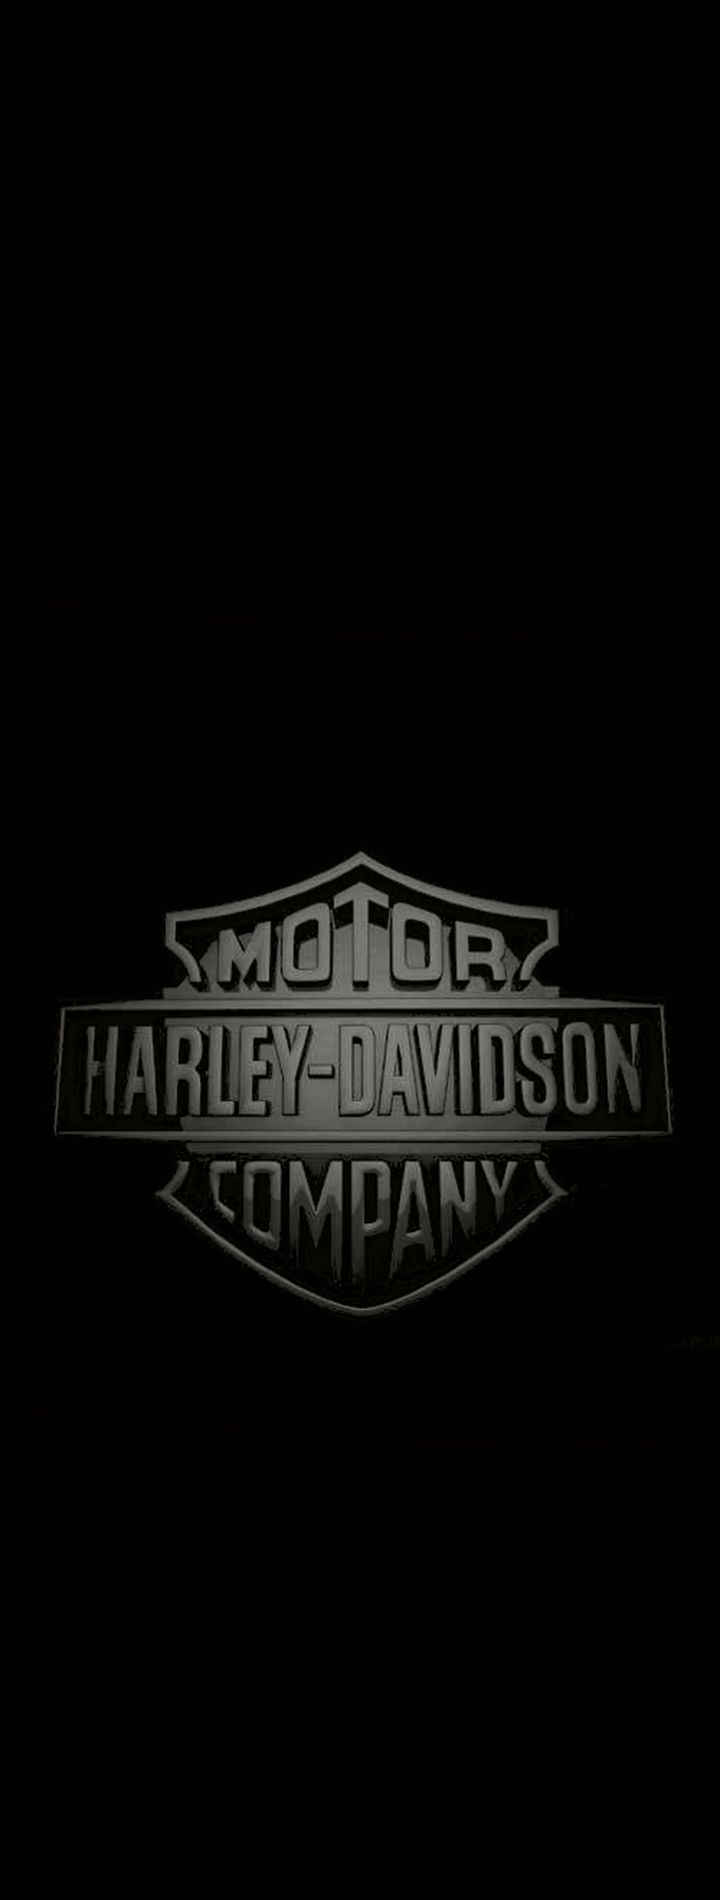 Harley Davidson Iphone Wallpapers